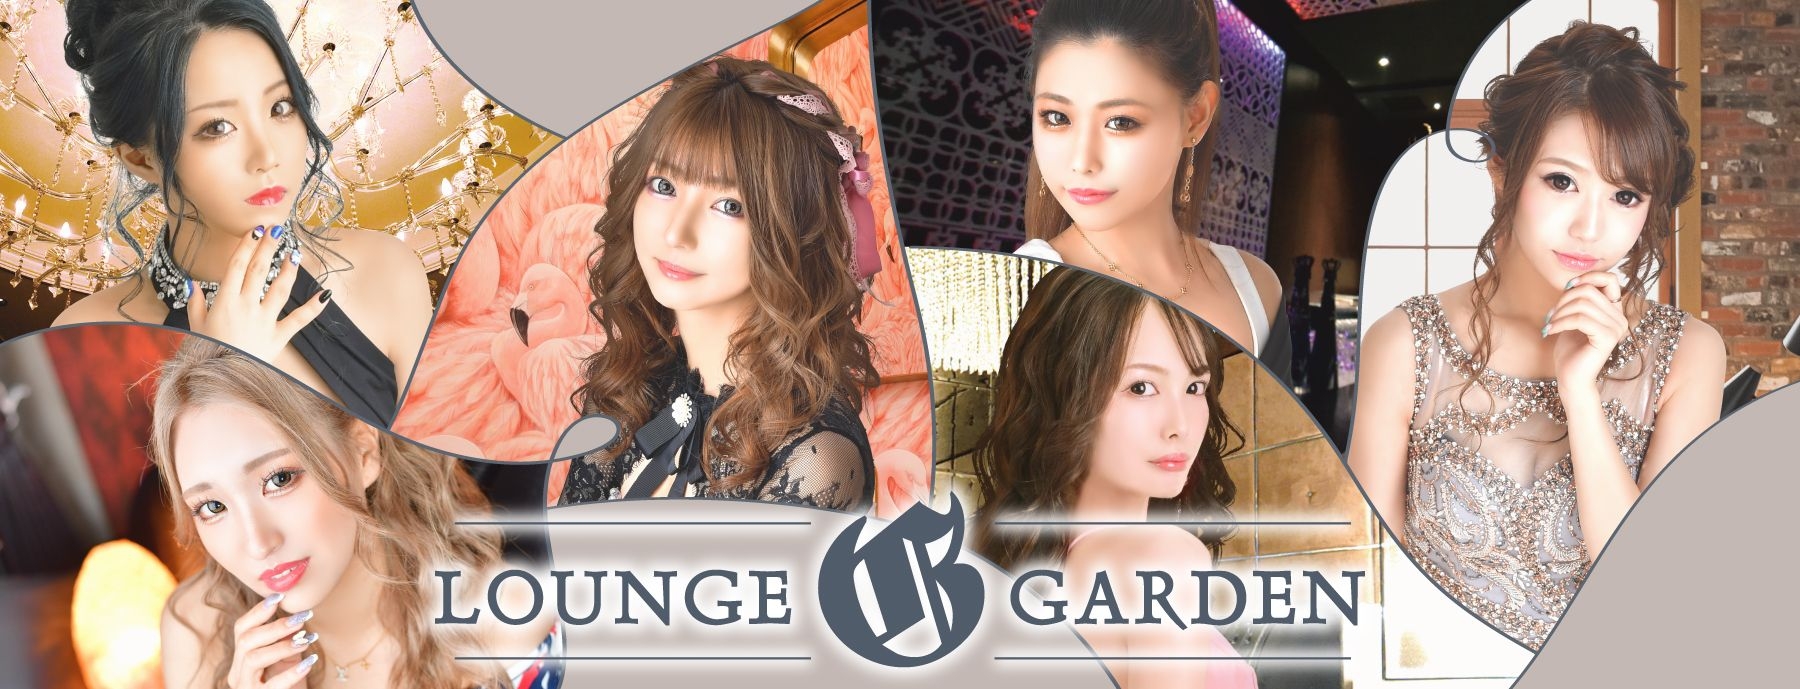 lounge Garden 〜ガーデン〜